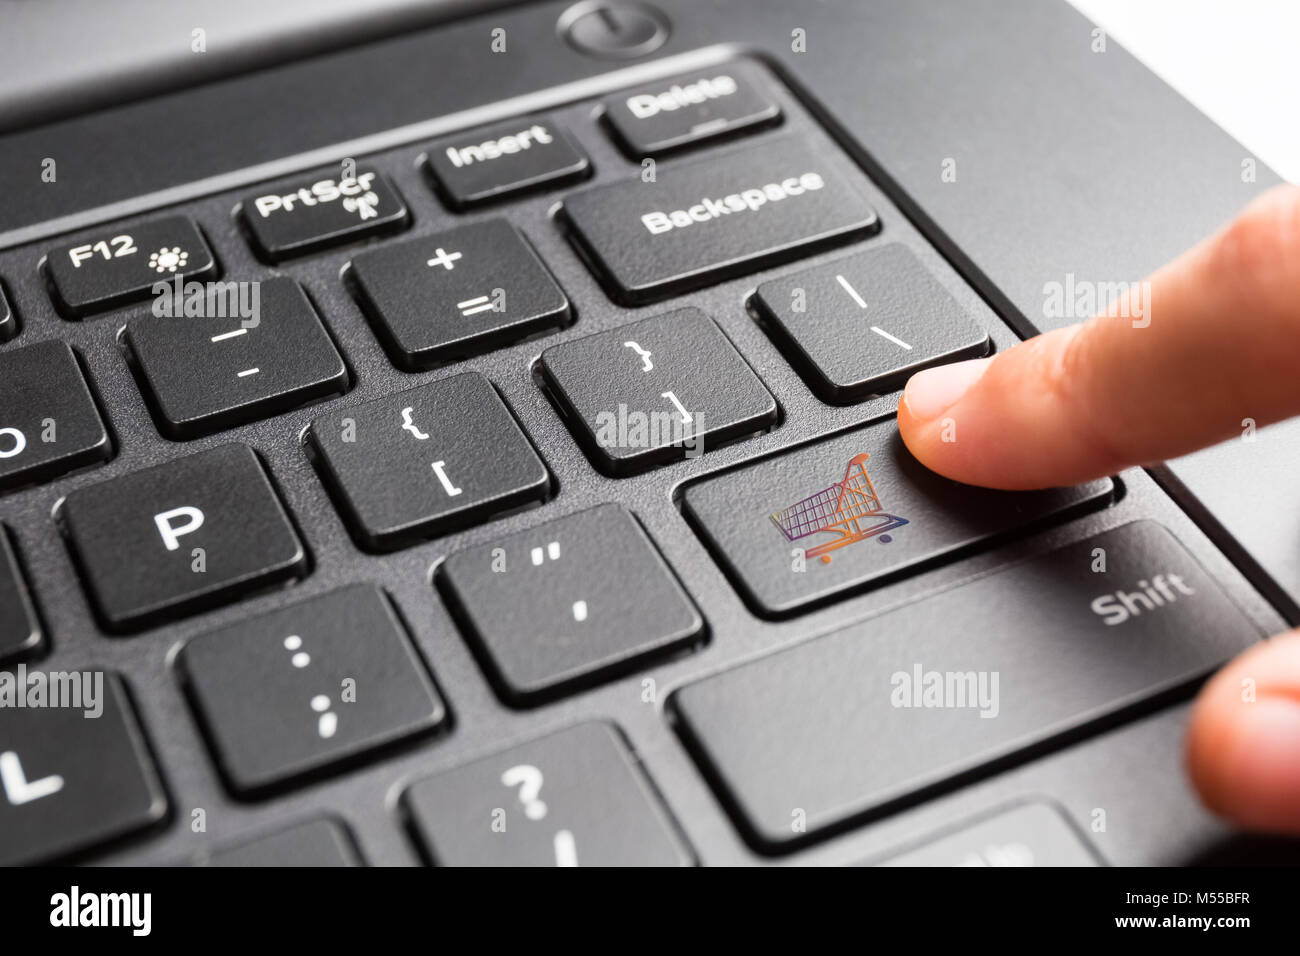 laptop keyboard with finger pressing shopping cart key Stock Photo